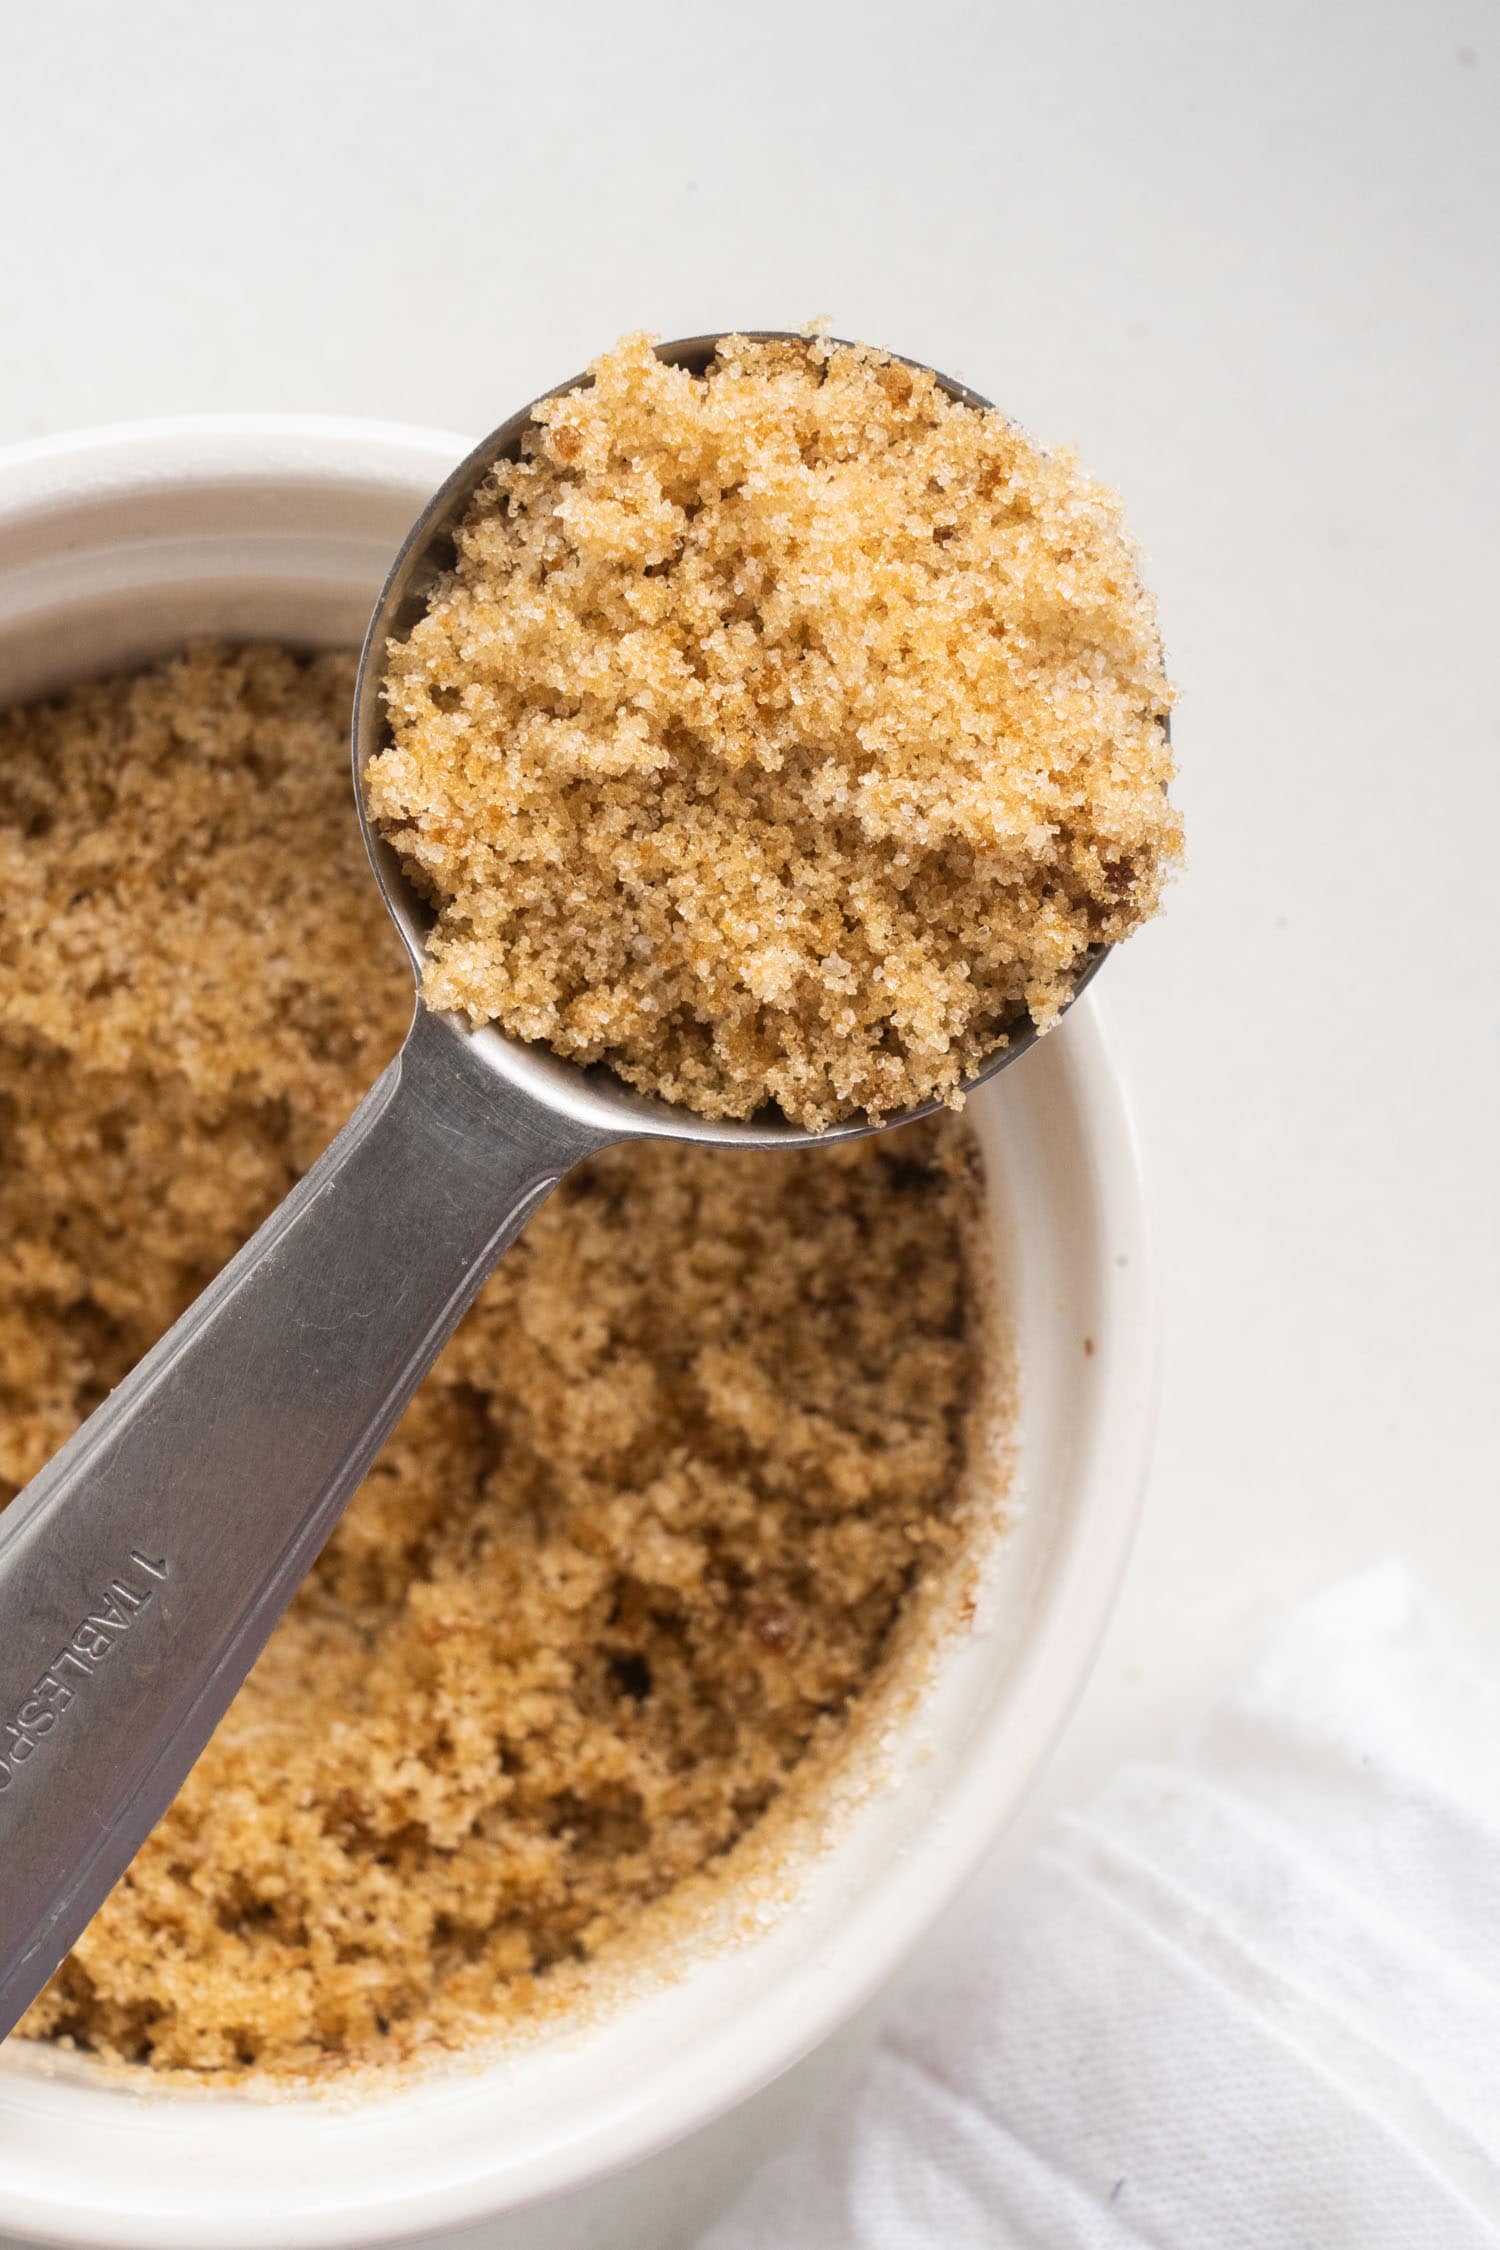 How to Make Brown Sugar (sugar and molasses) - Brooklyn Farm Girl